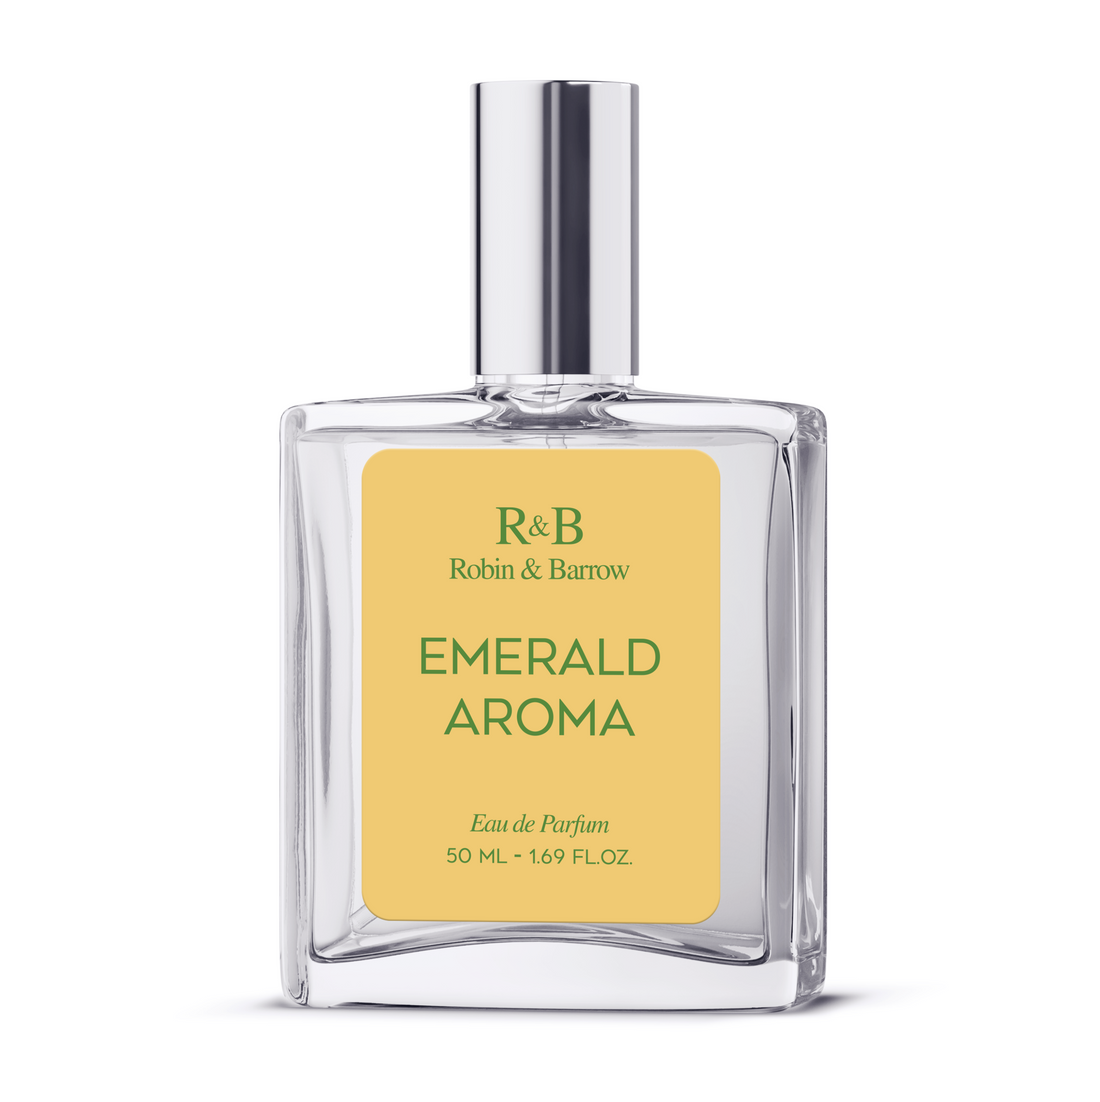 Emerald Aroma